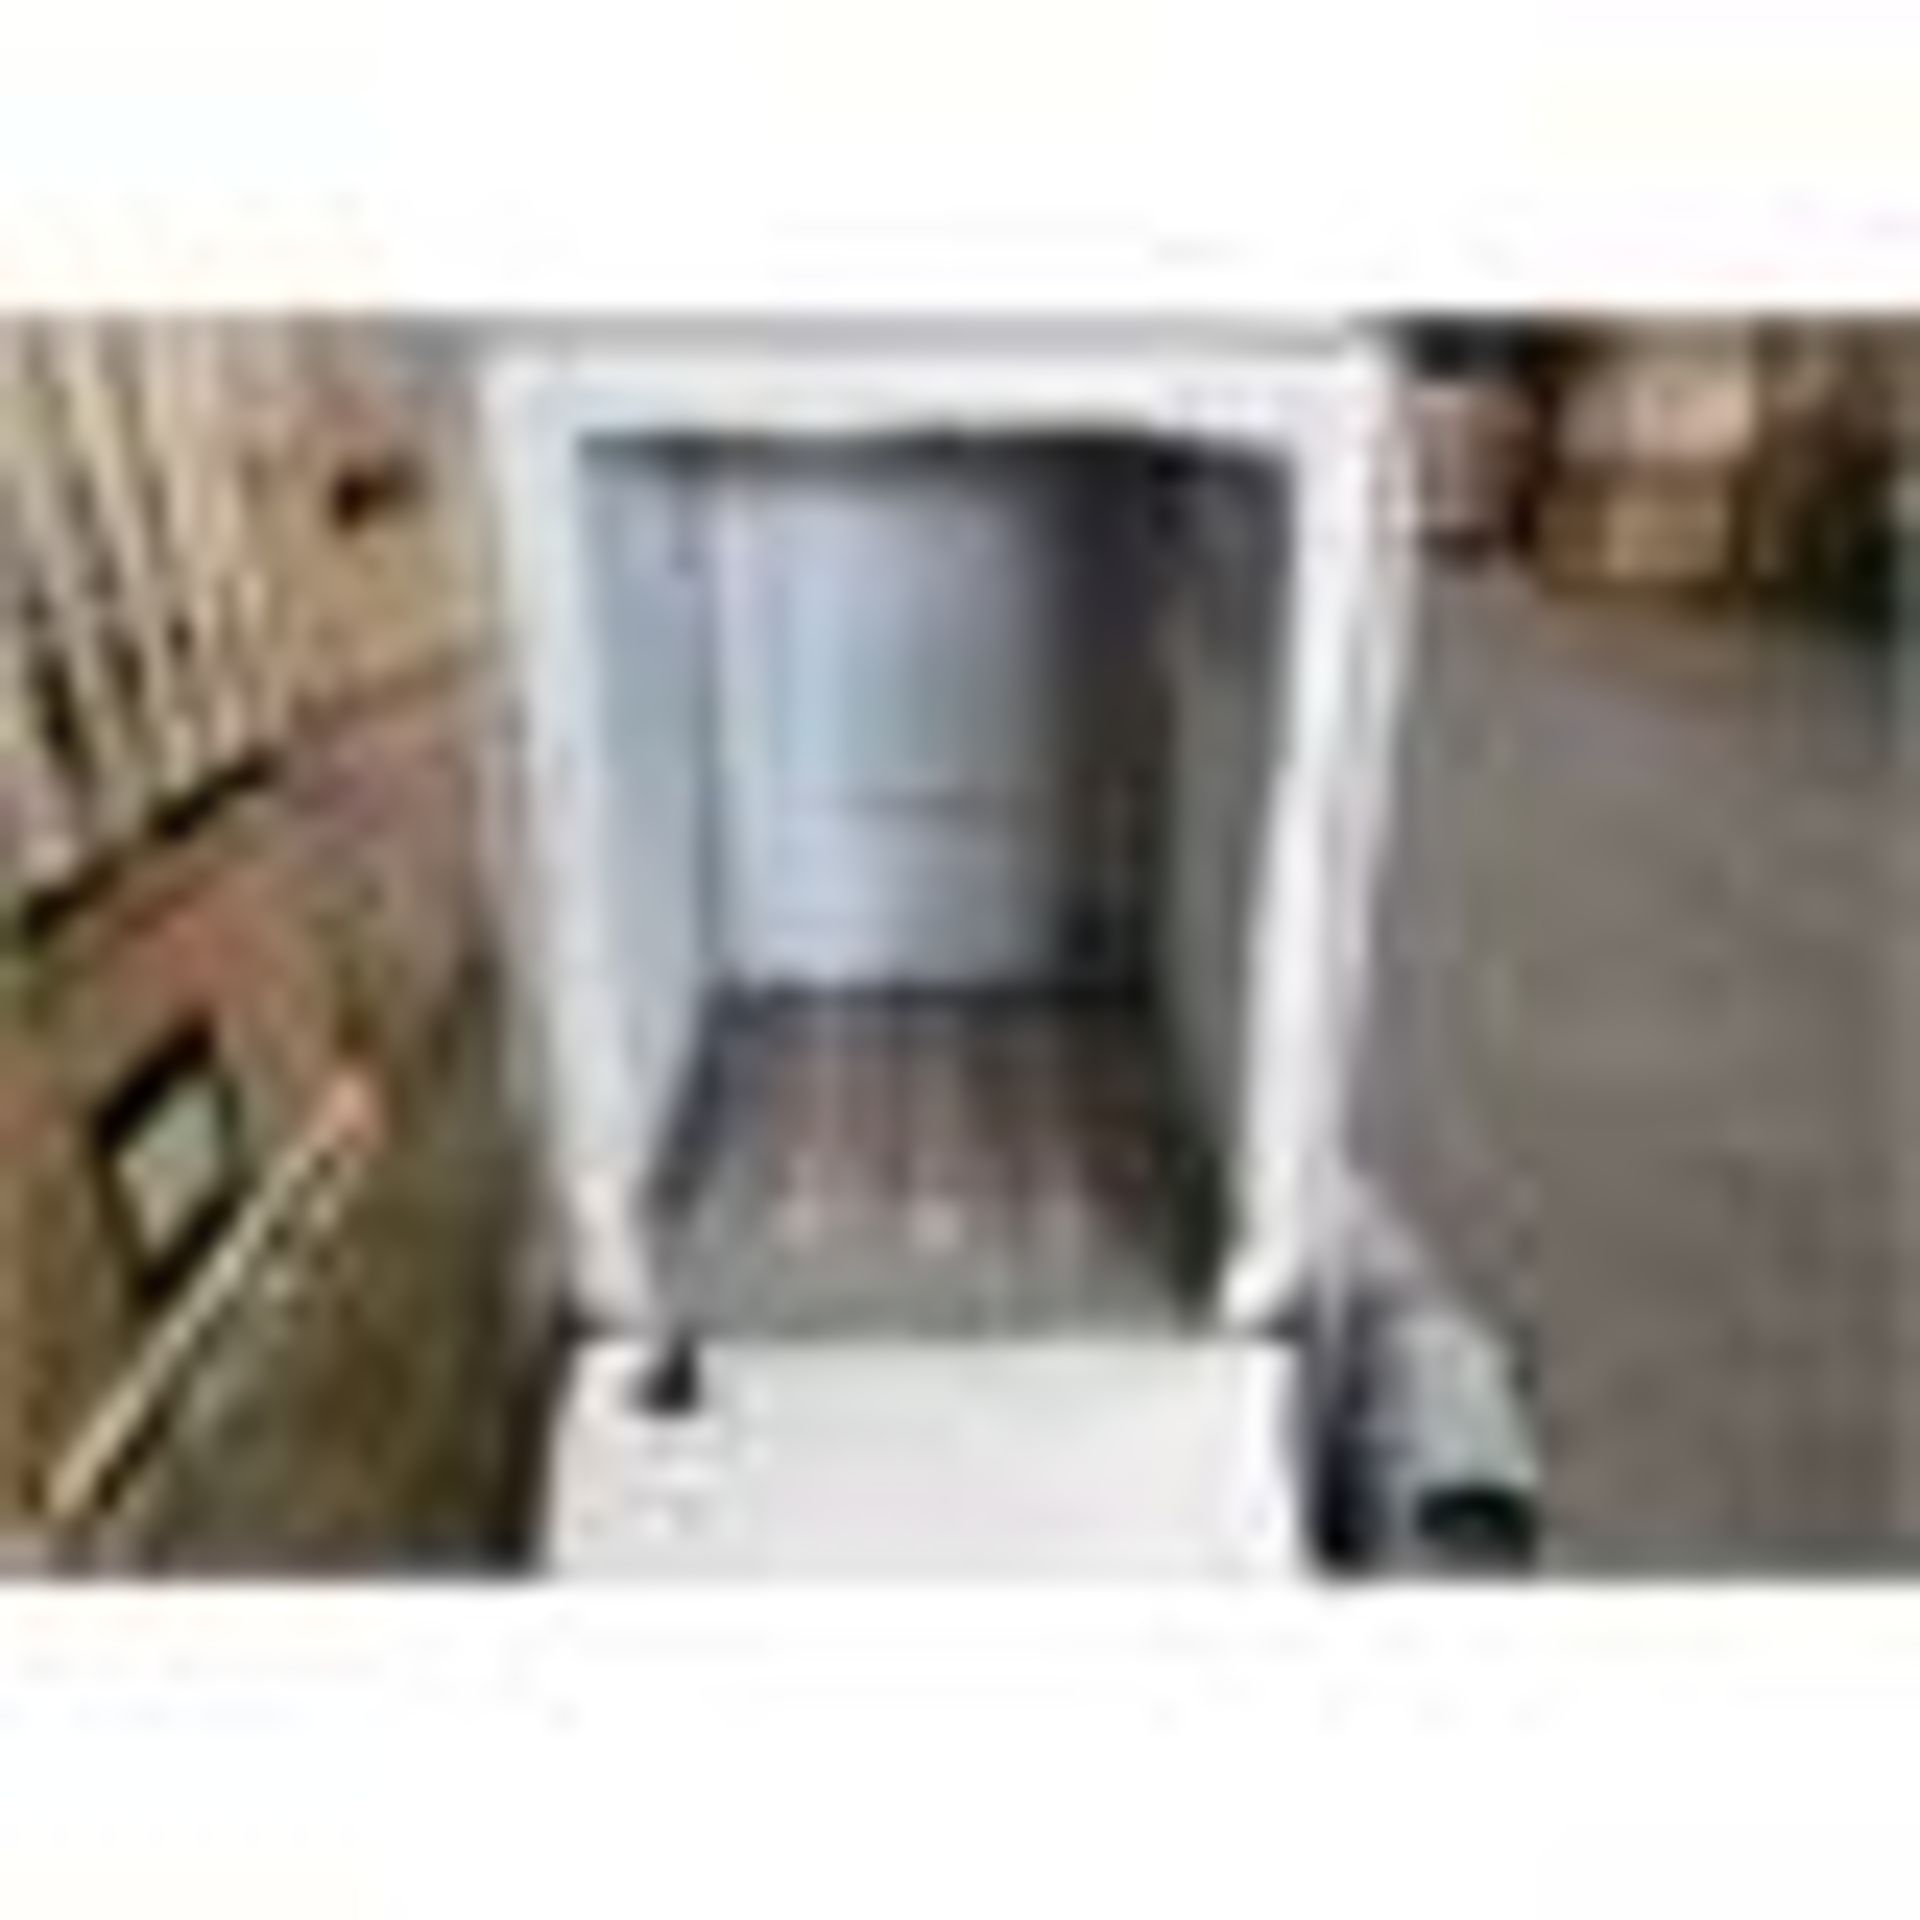 Unissued Aerotrim EC04 Collapsible Refrigeration Unit - Image 2 of 10